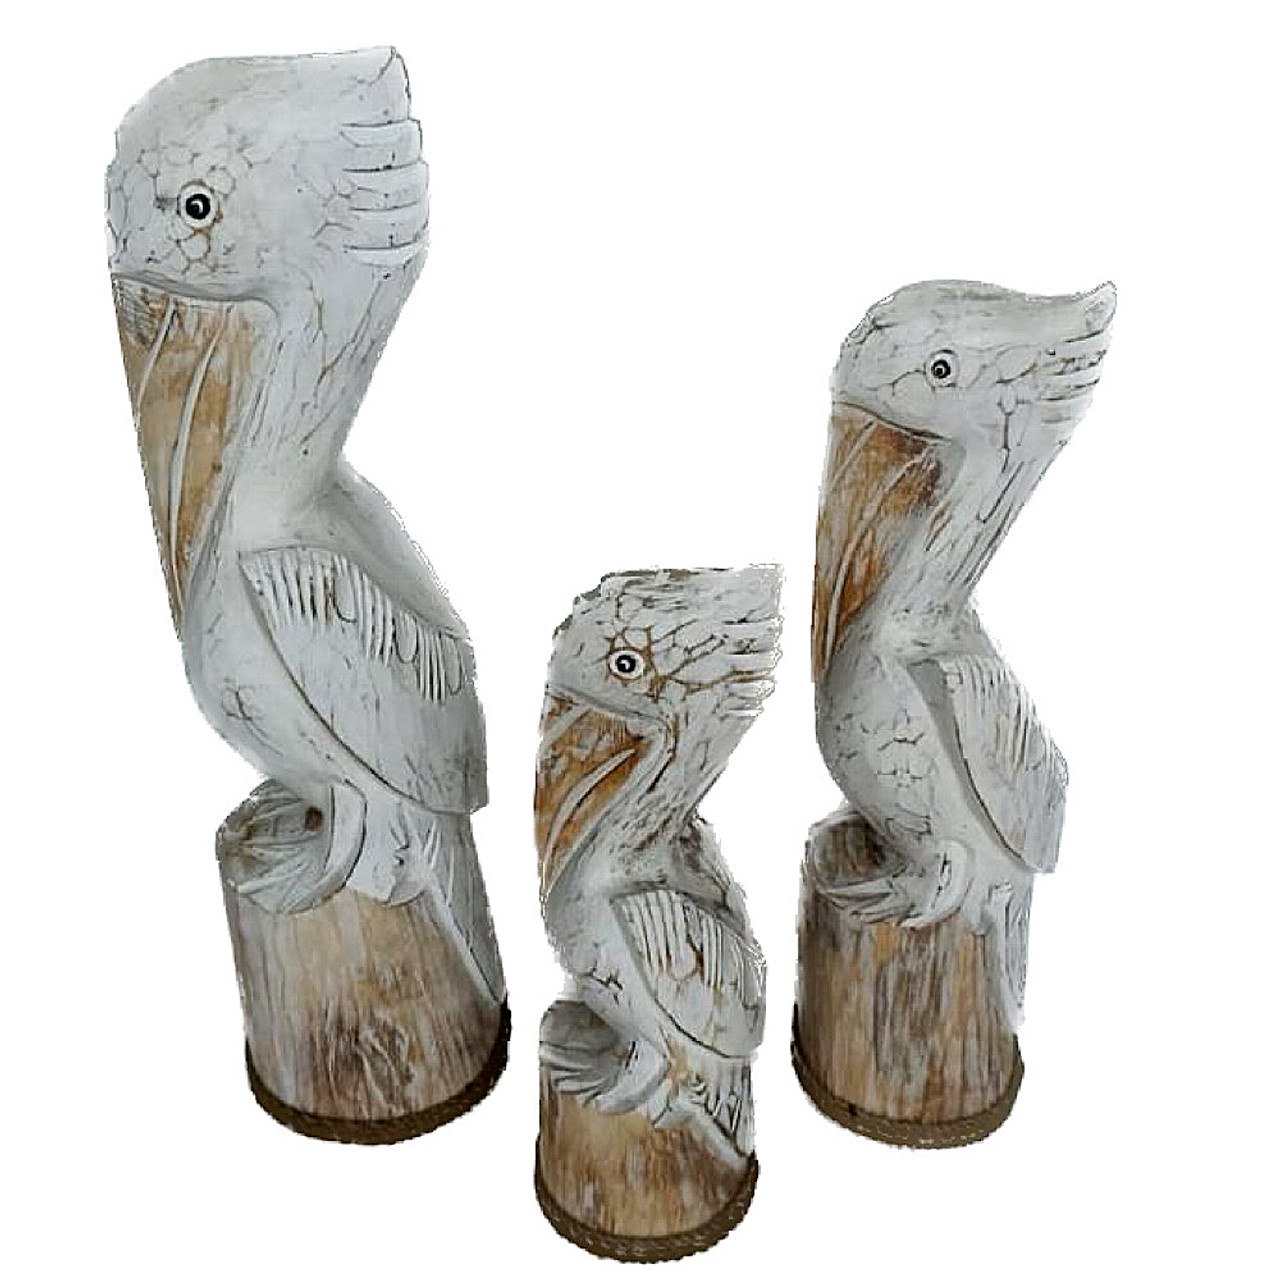 Home Decor Seaside Sitting Wood Pelicans Set of 3 Home Decoration Ornament Table decor
50/40/30 cm